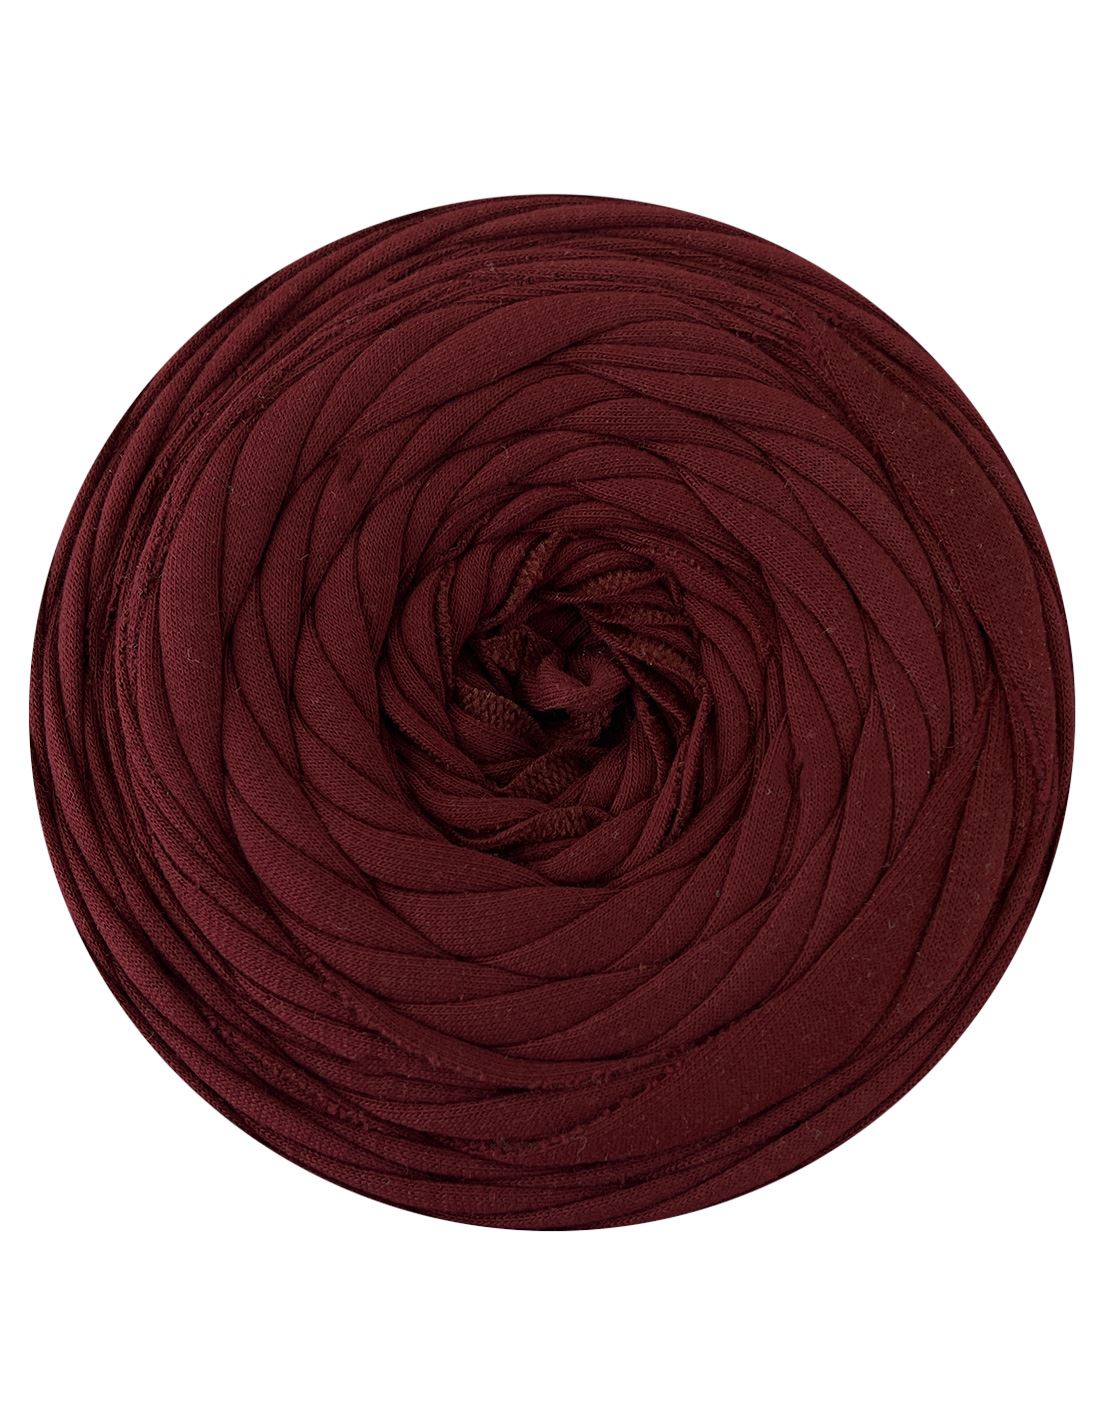 Deep sangria red t-shirt yarn by Rescue Yarn (100-120m)